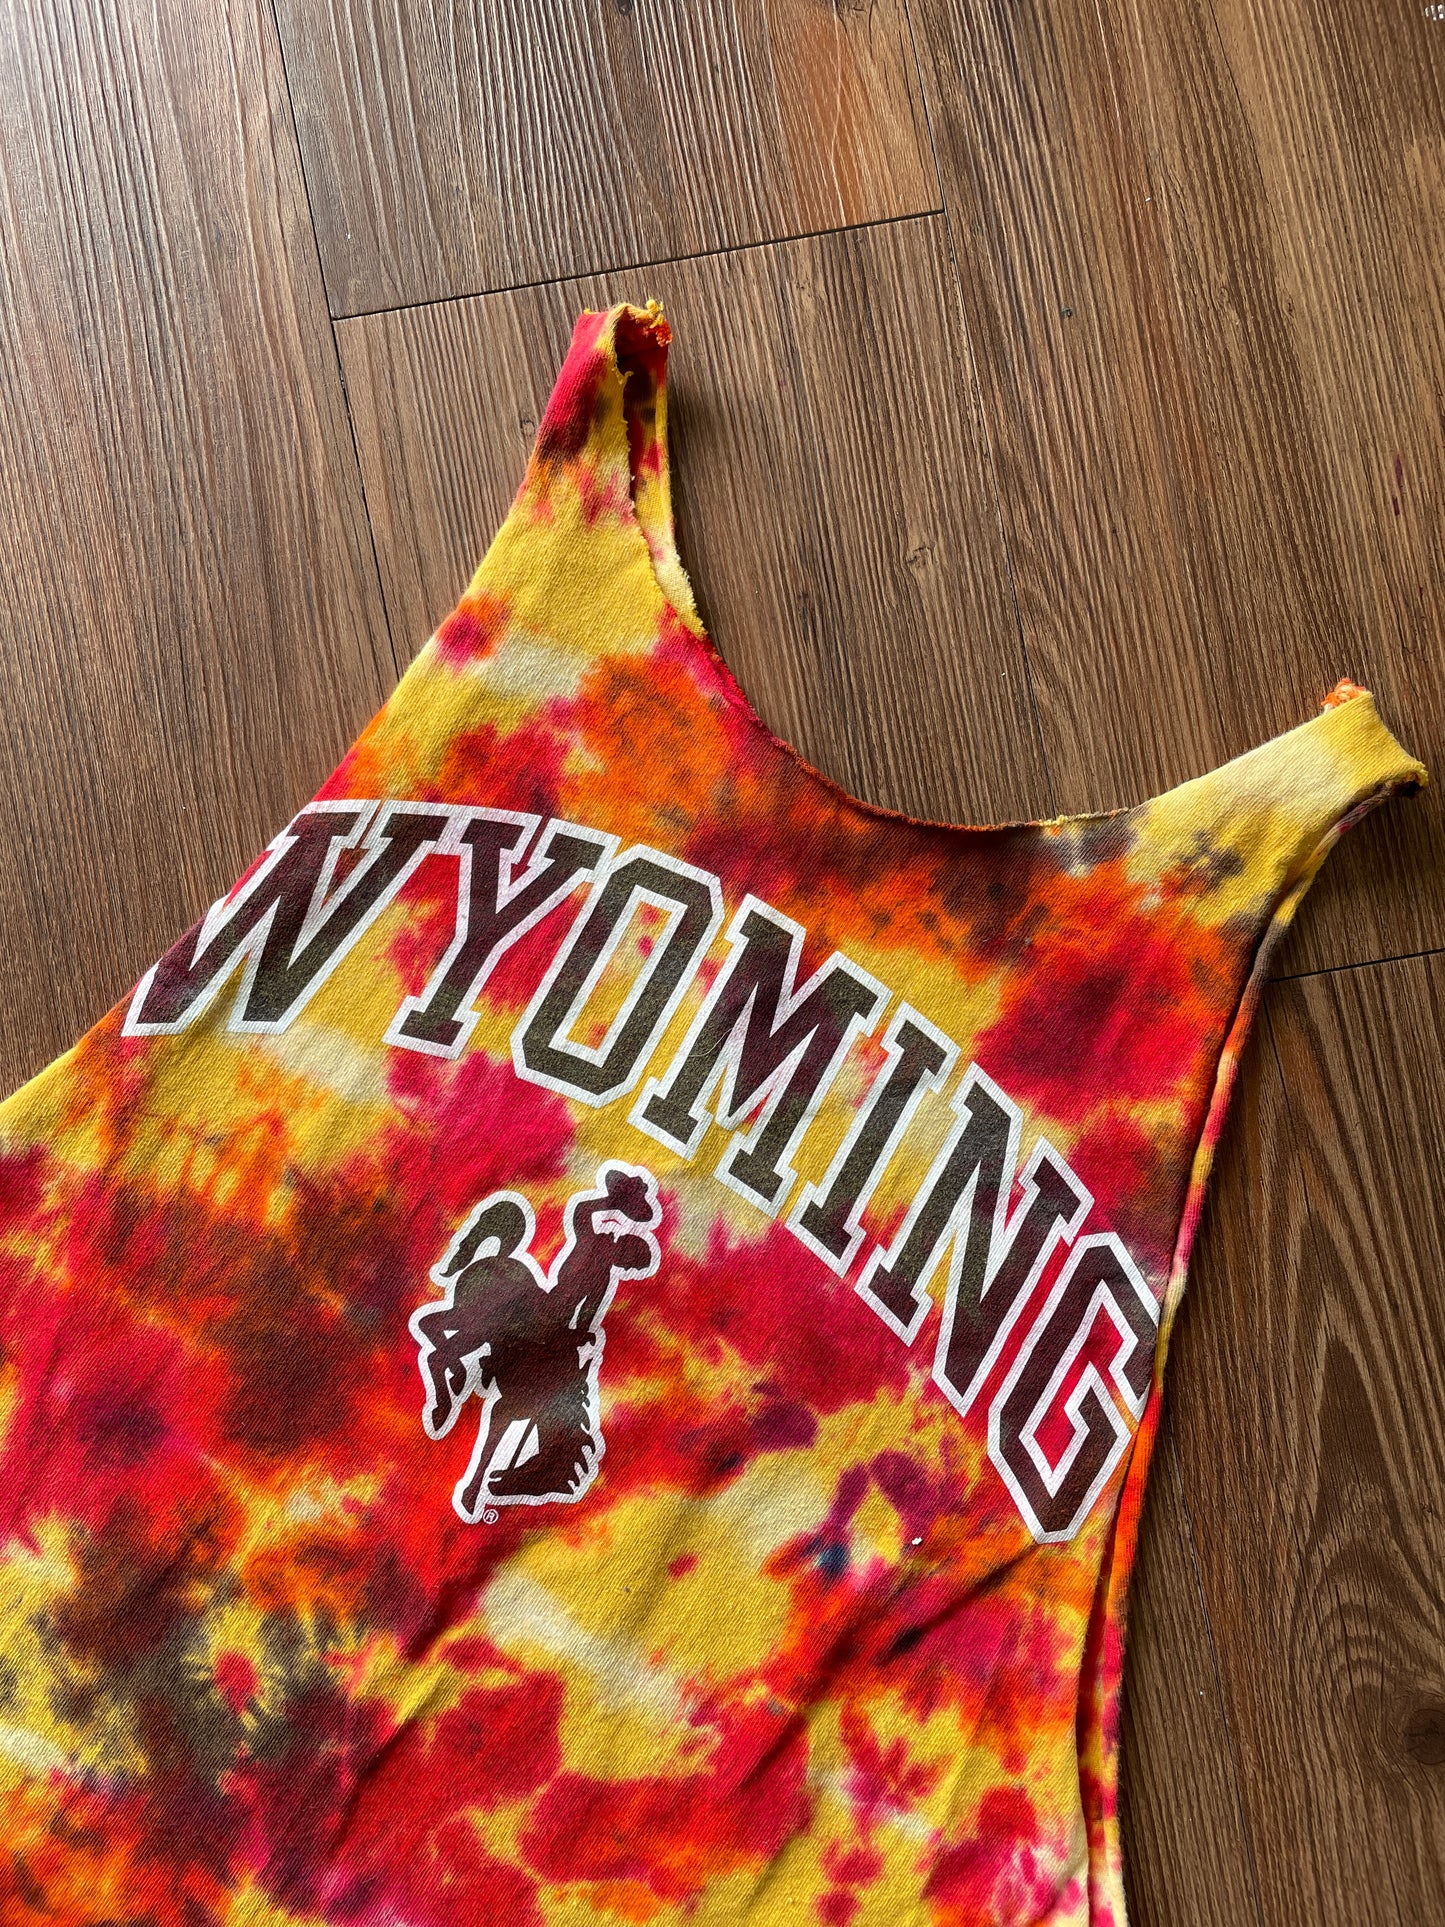 Small Men’s Wyoming Cowboys Tie Dye Cutoff Tank Top | Yellow and Red Tie Dye Sleeveless Shirt